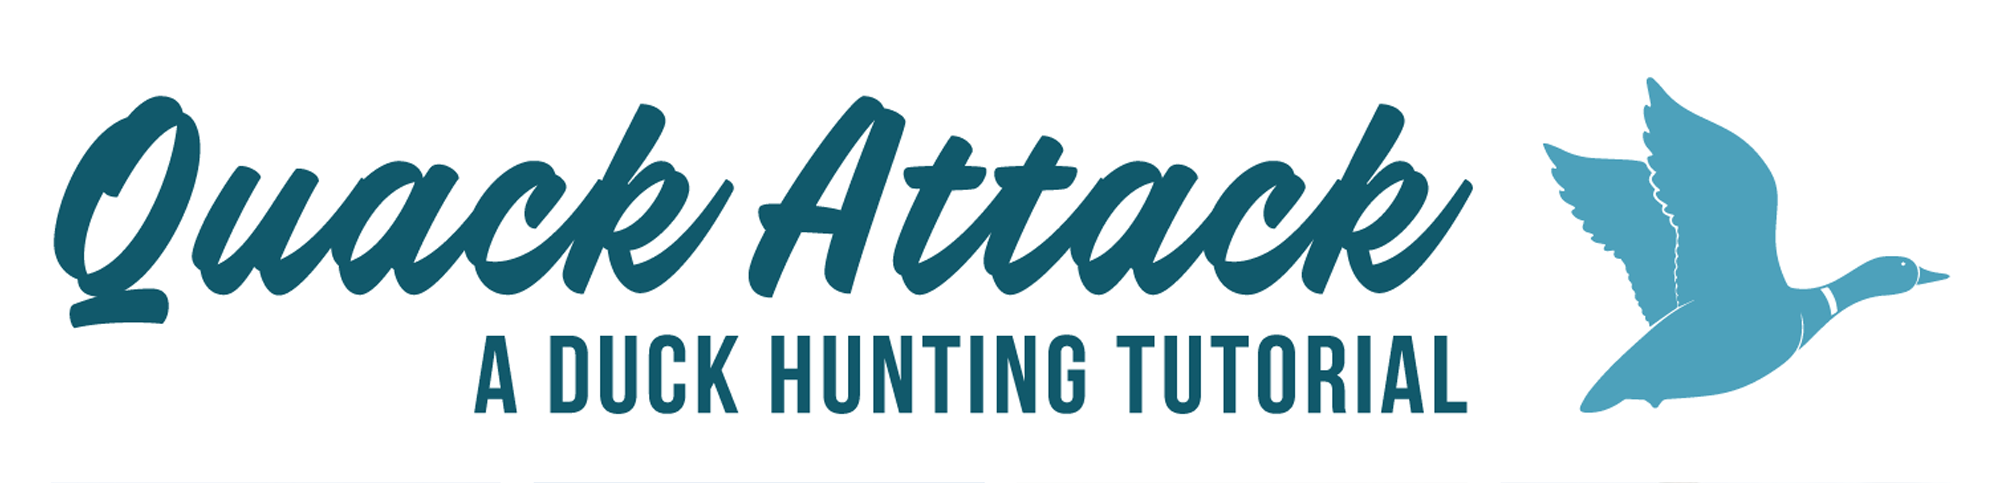 Quack Attack: A Duck Hunting Tutorial